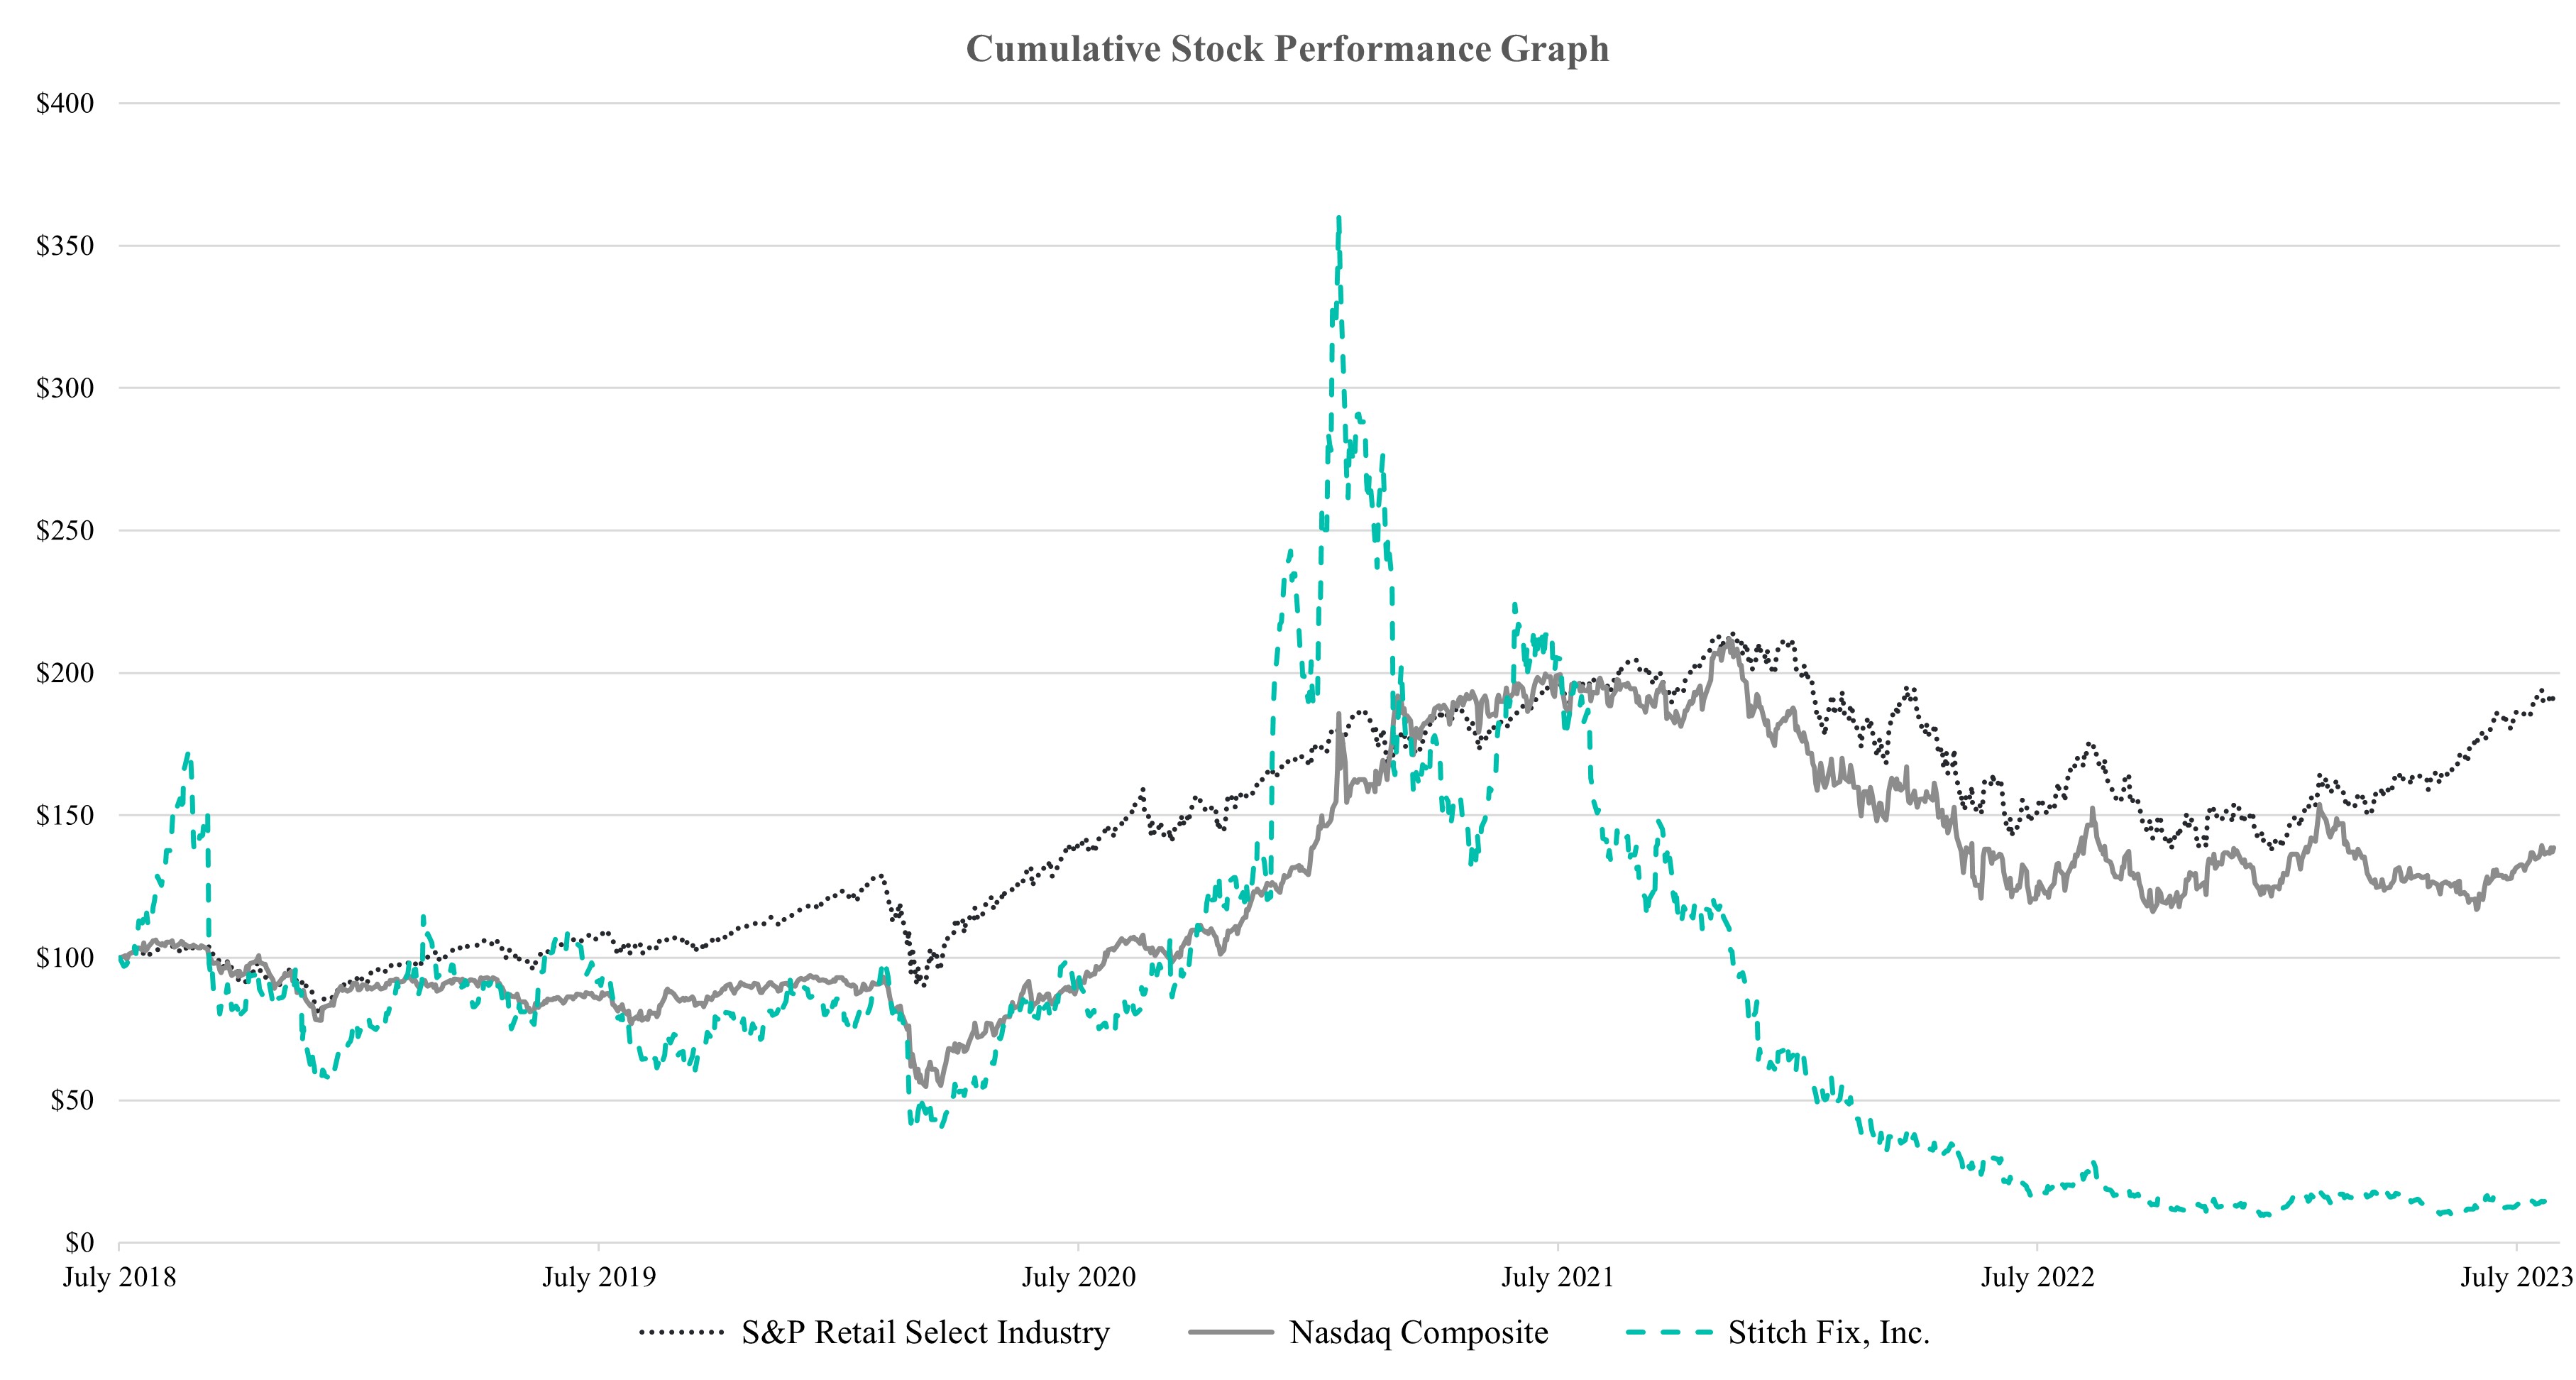 35. SFIX Stock Performance Chart FY23_GraphJPG_082223.jpg